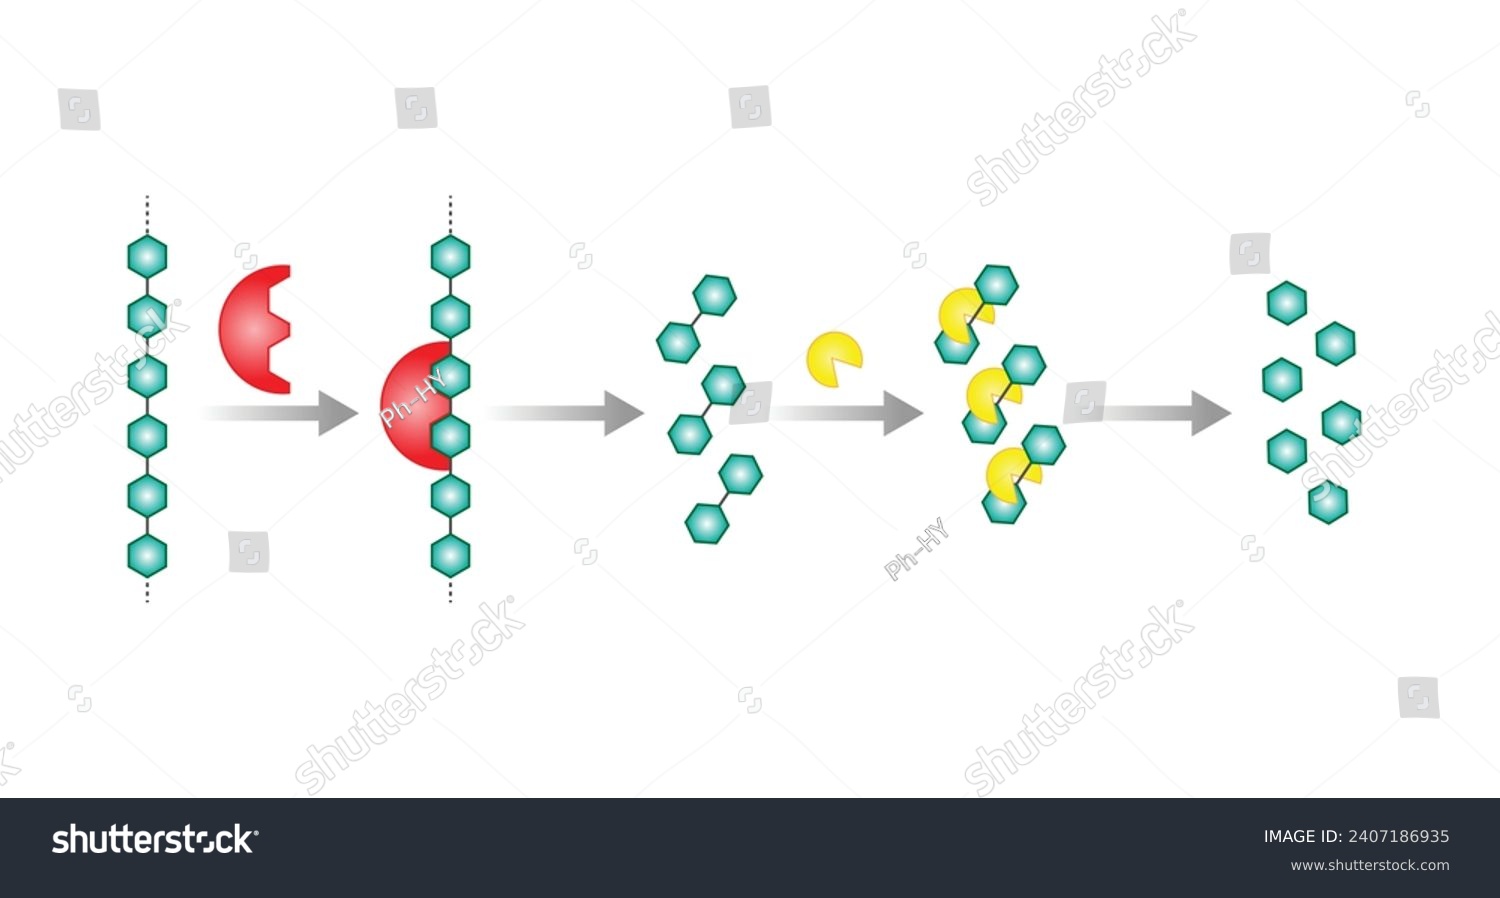 SVG of Carbohydrates Digestion. Amylase and Maltase Enzymes catalyze Polysaccharide Starch Molecule to Disaccharide Maltose Molecules, glucose Sugar Formation. Scientific Diagram. Vector Illustration. svg